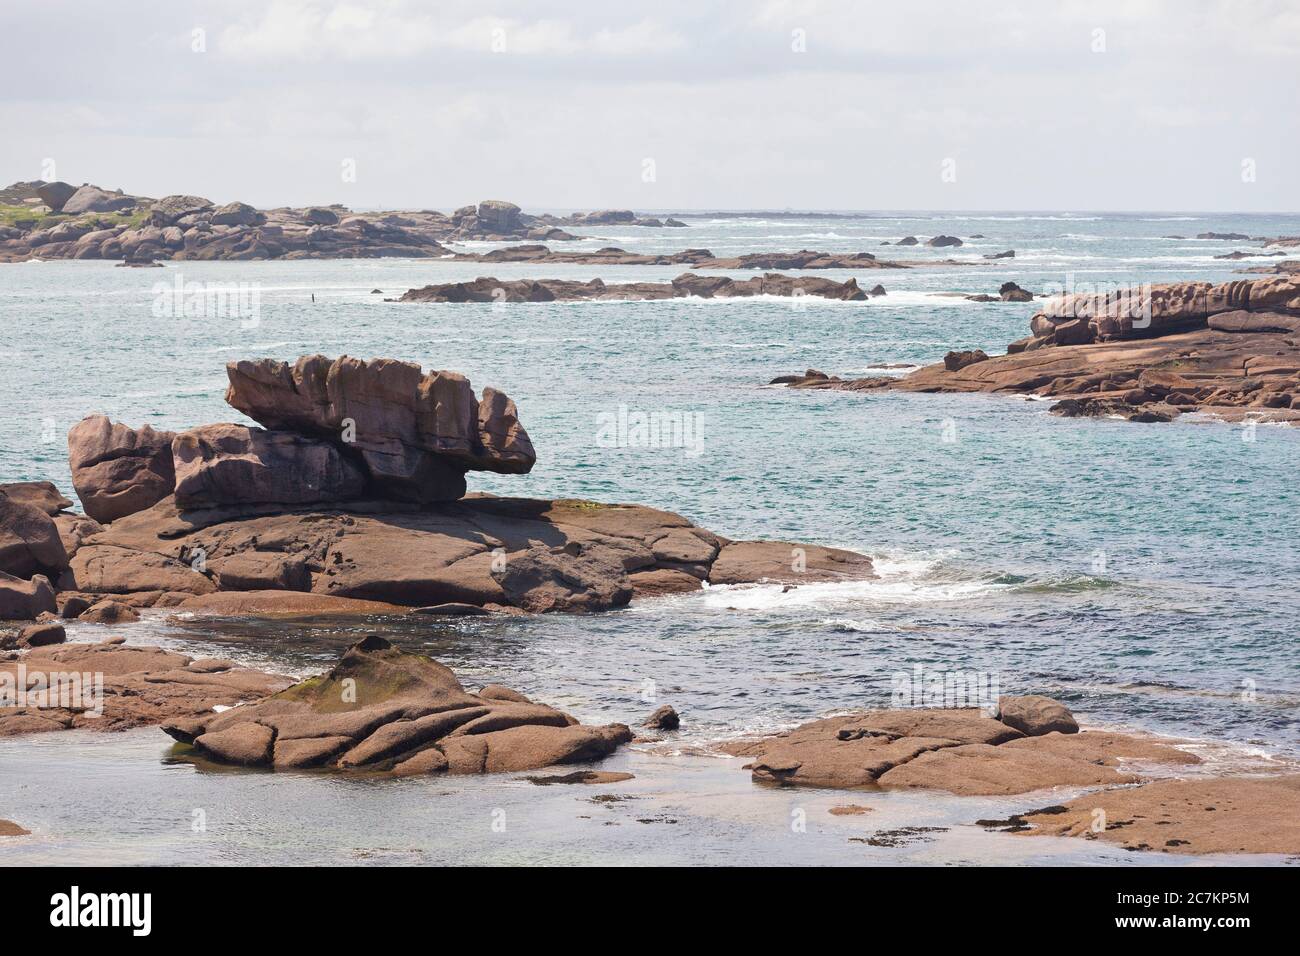 Cote de Granit Rose - Stones and Sea Cote Armor, Brittany, France, Europe Stock Photo